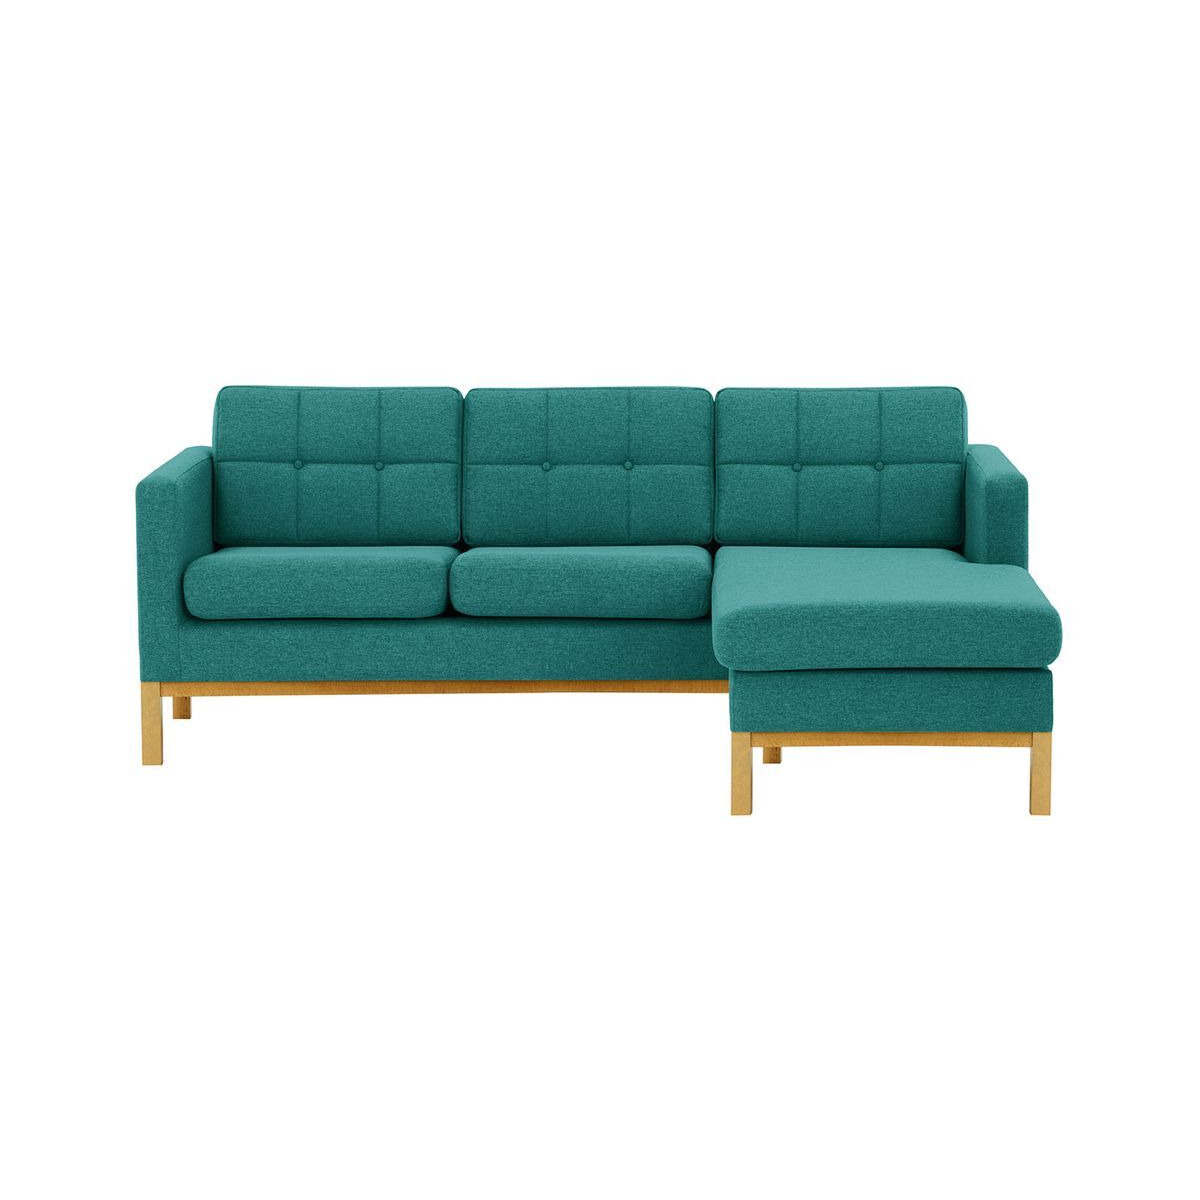 Normann Right Hand Corner Sofa, turquoise, Leg colour: like oak - image 1